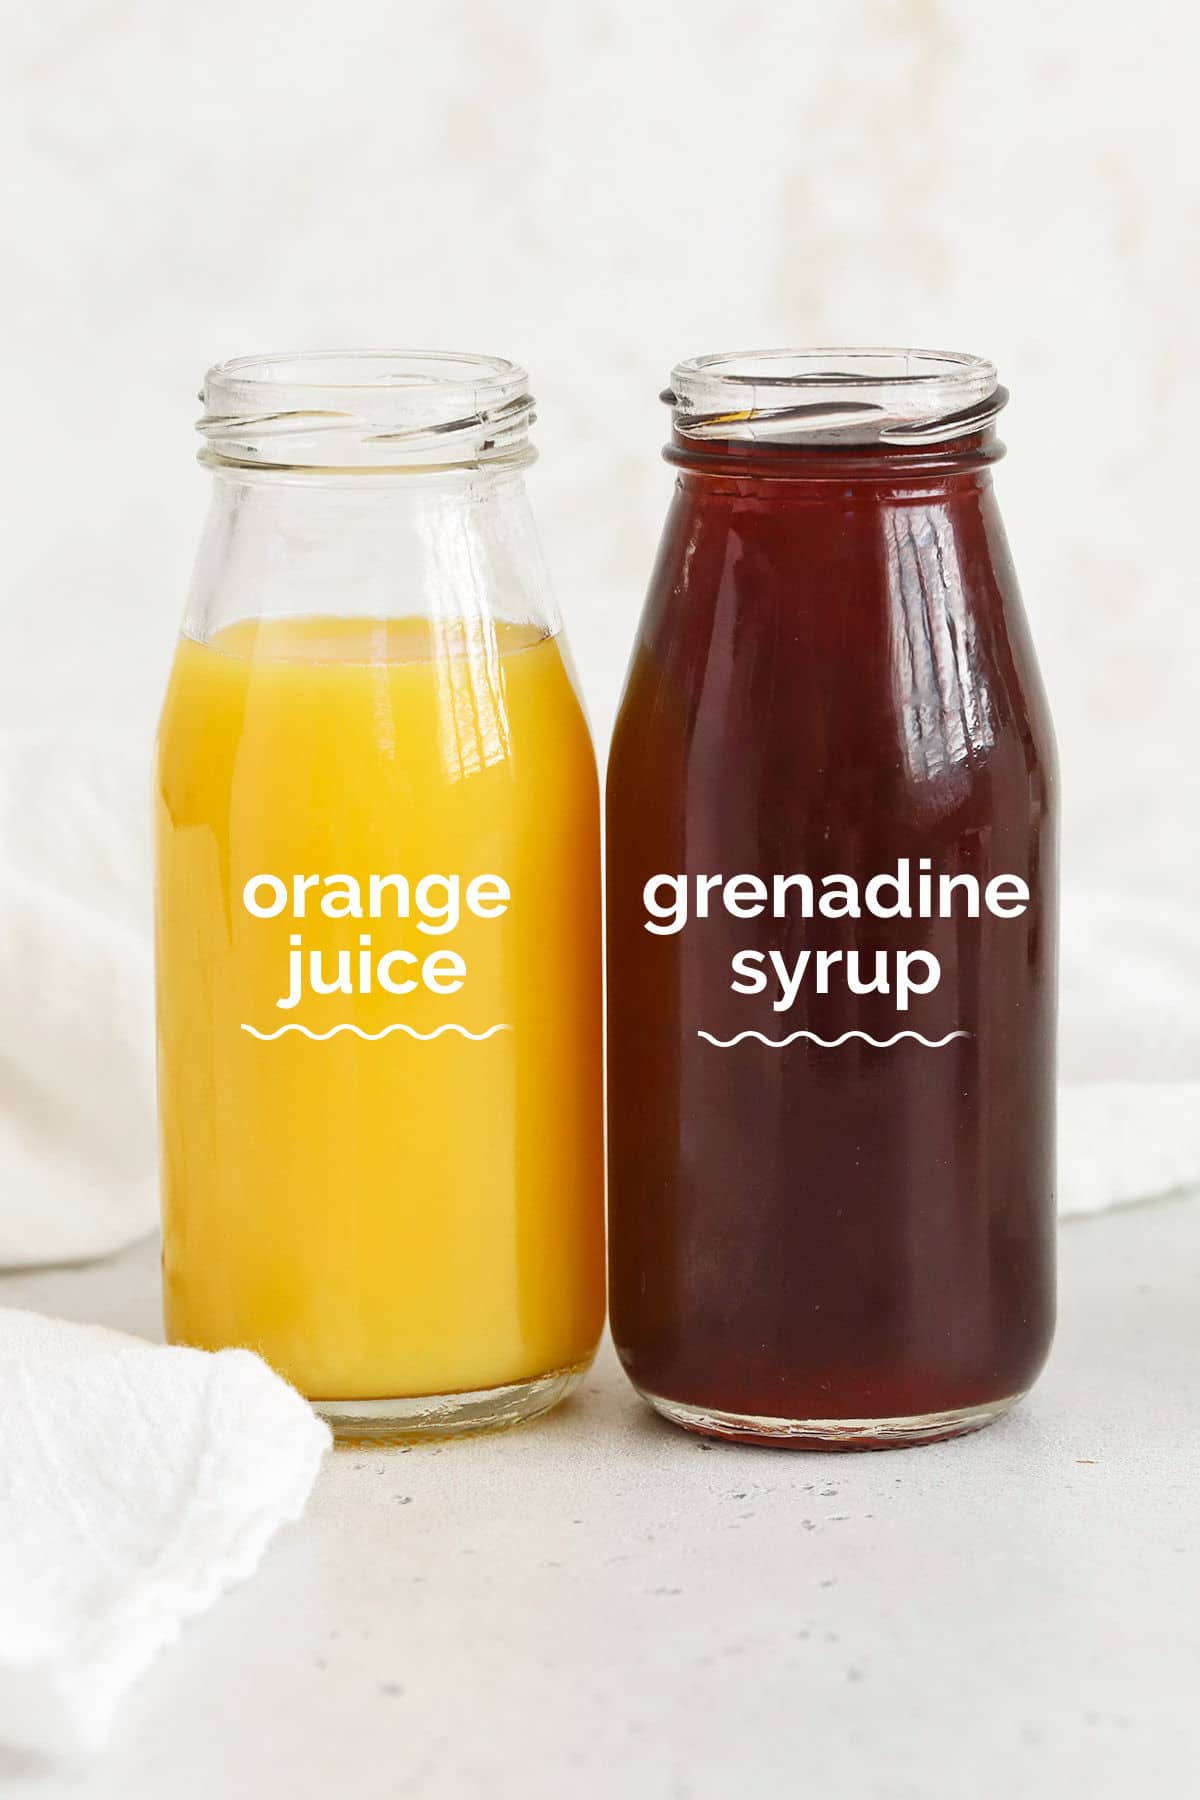 Orange juice and grenadine to make sweet sunrise mocktails